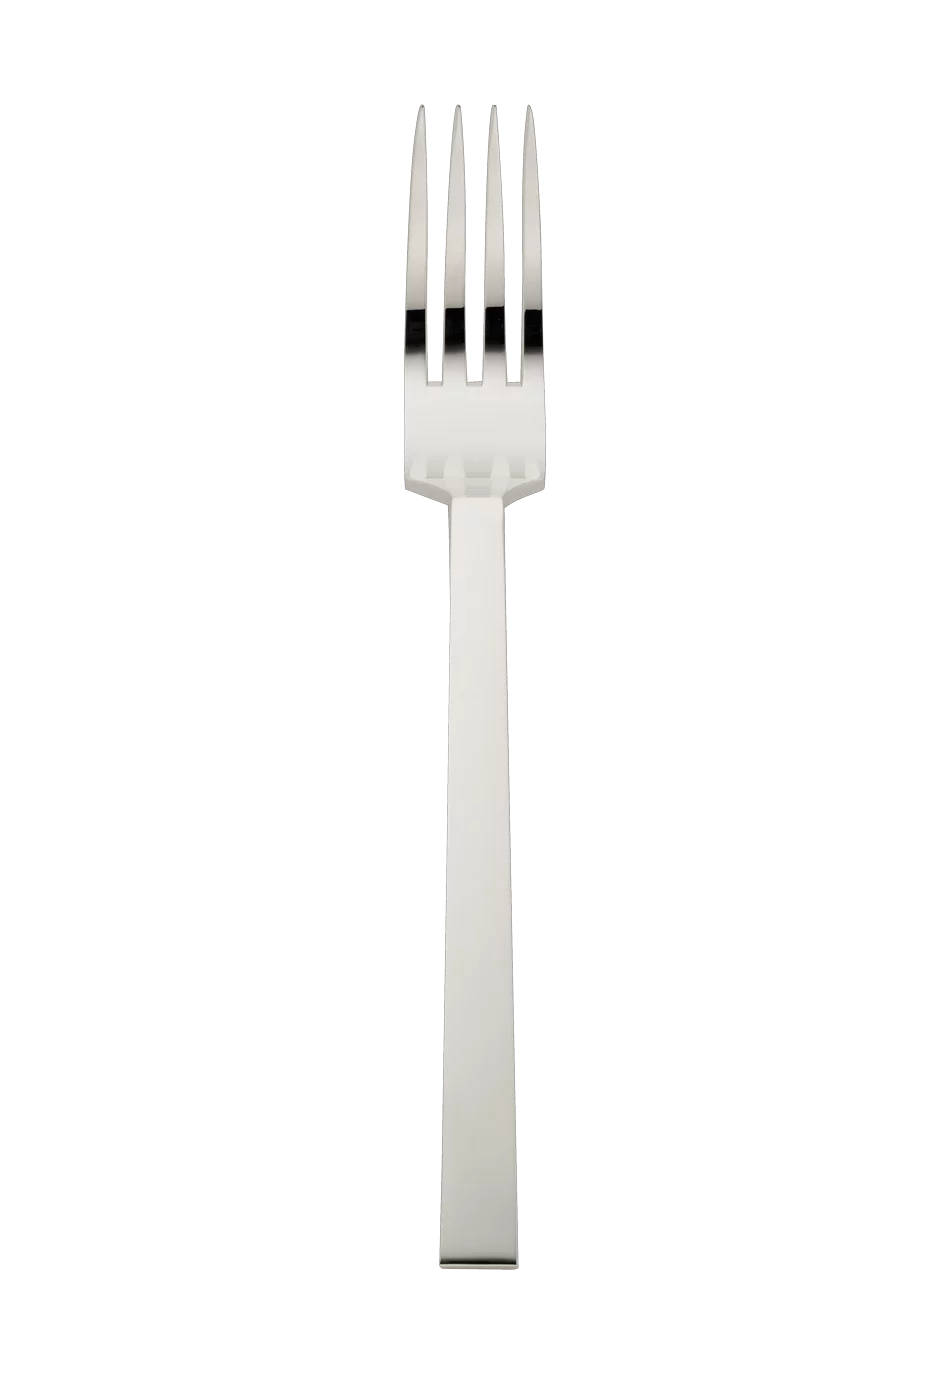 Sphinx Vegetable Fork (150g massive silverplated)